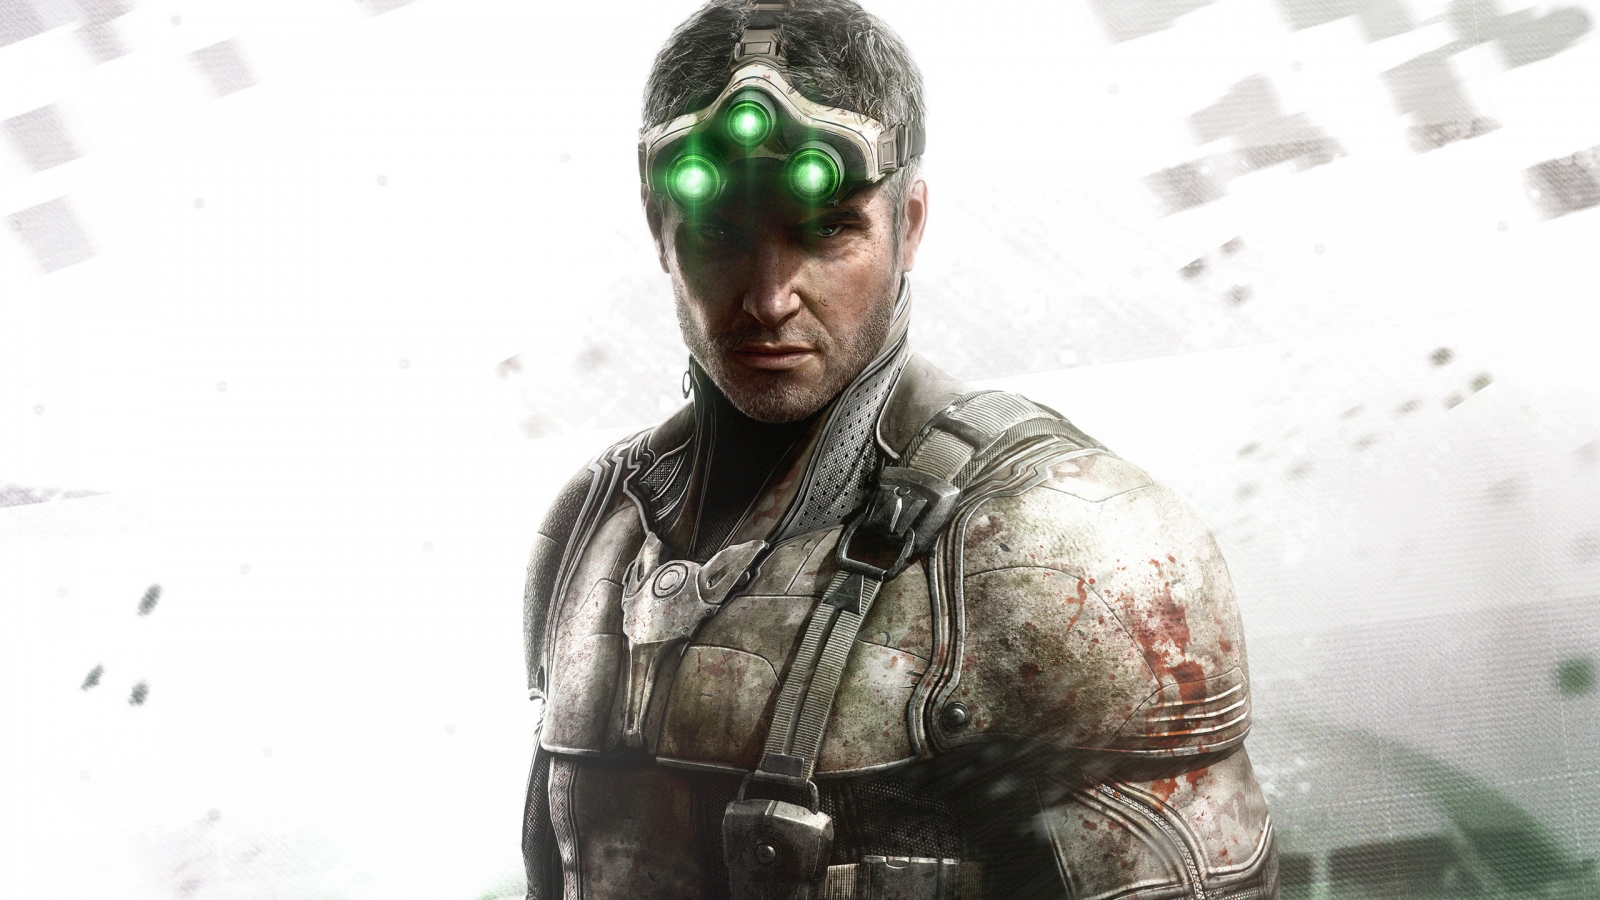 Splinter Cell Blacklist Video Game for 1600 x 900 HDTV resolution